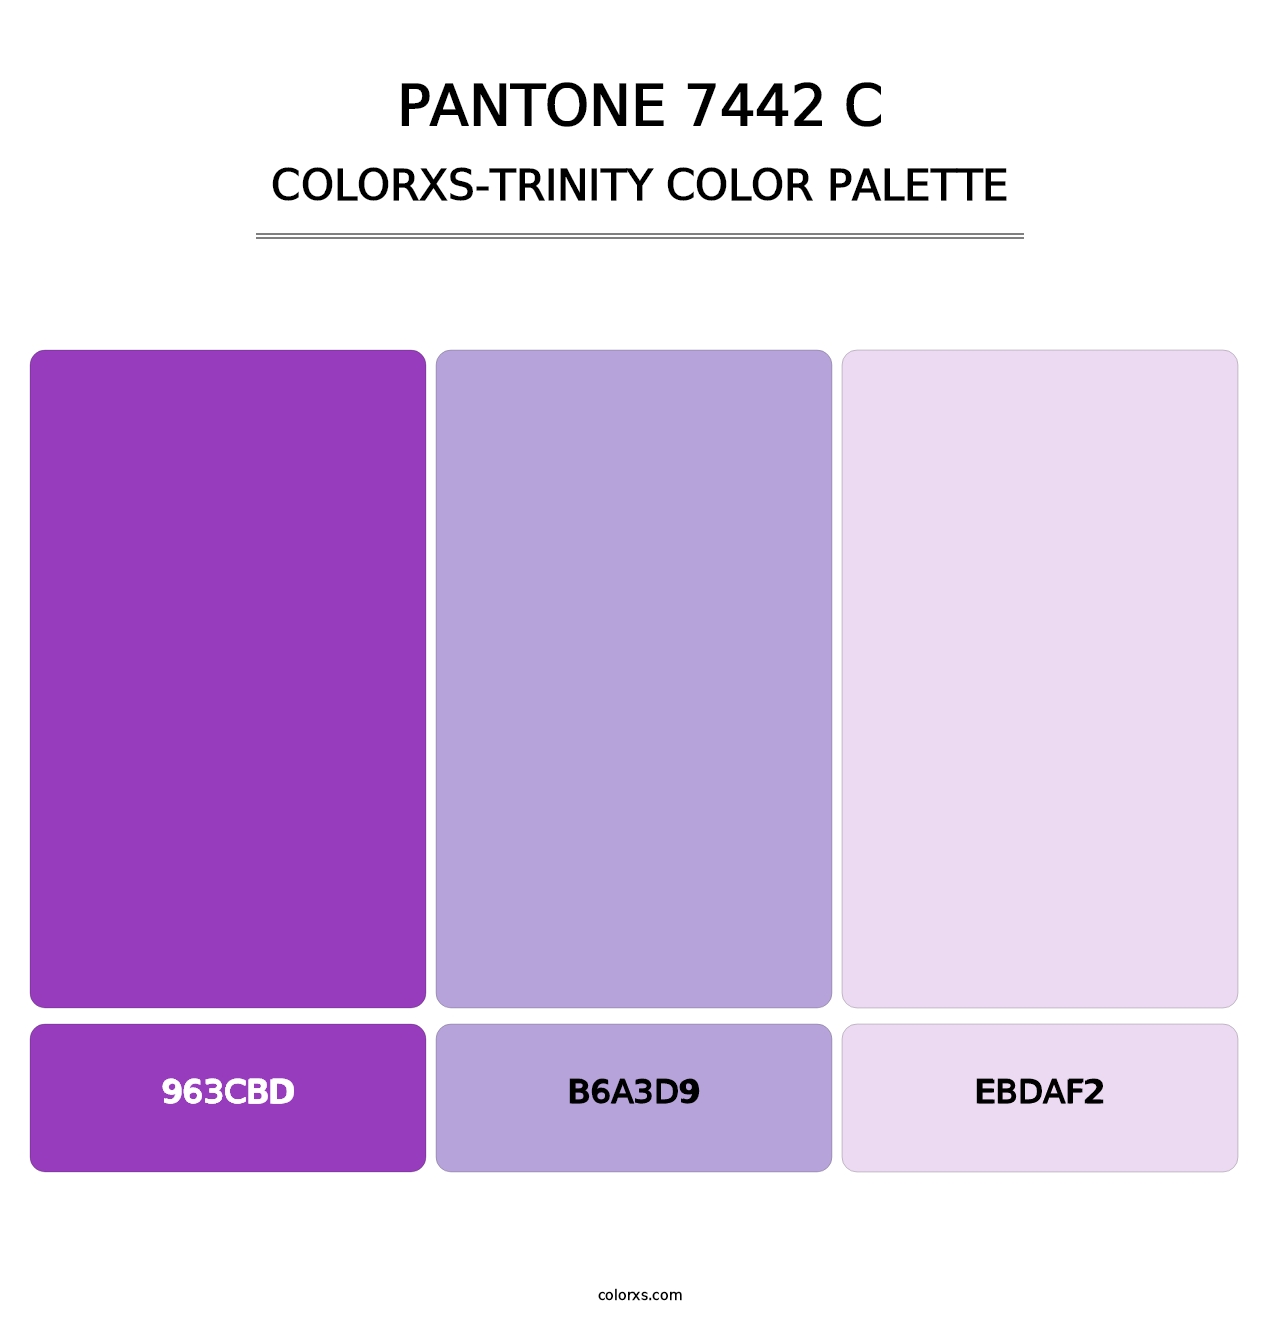 PANTONE 7442 C - Colorxs Trinity Palette